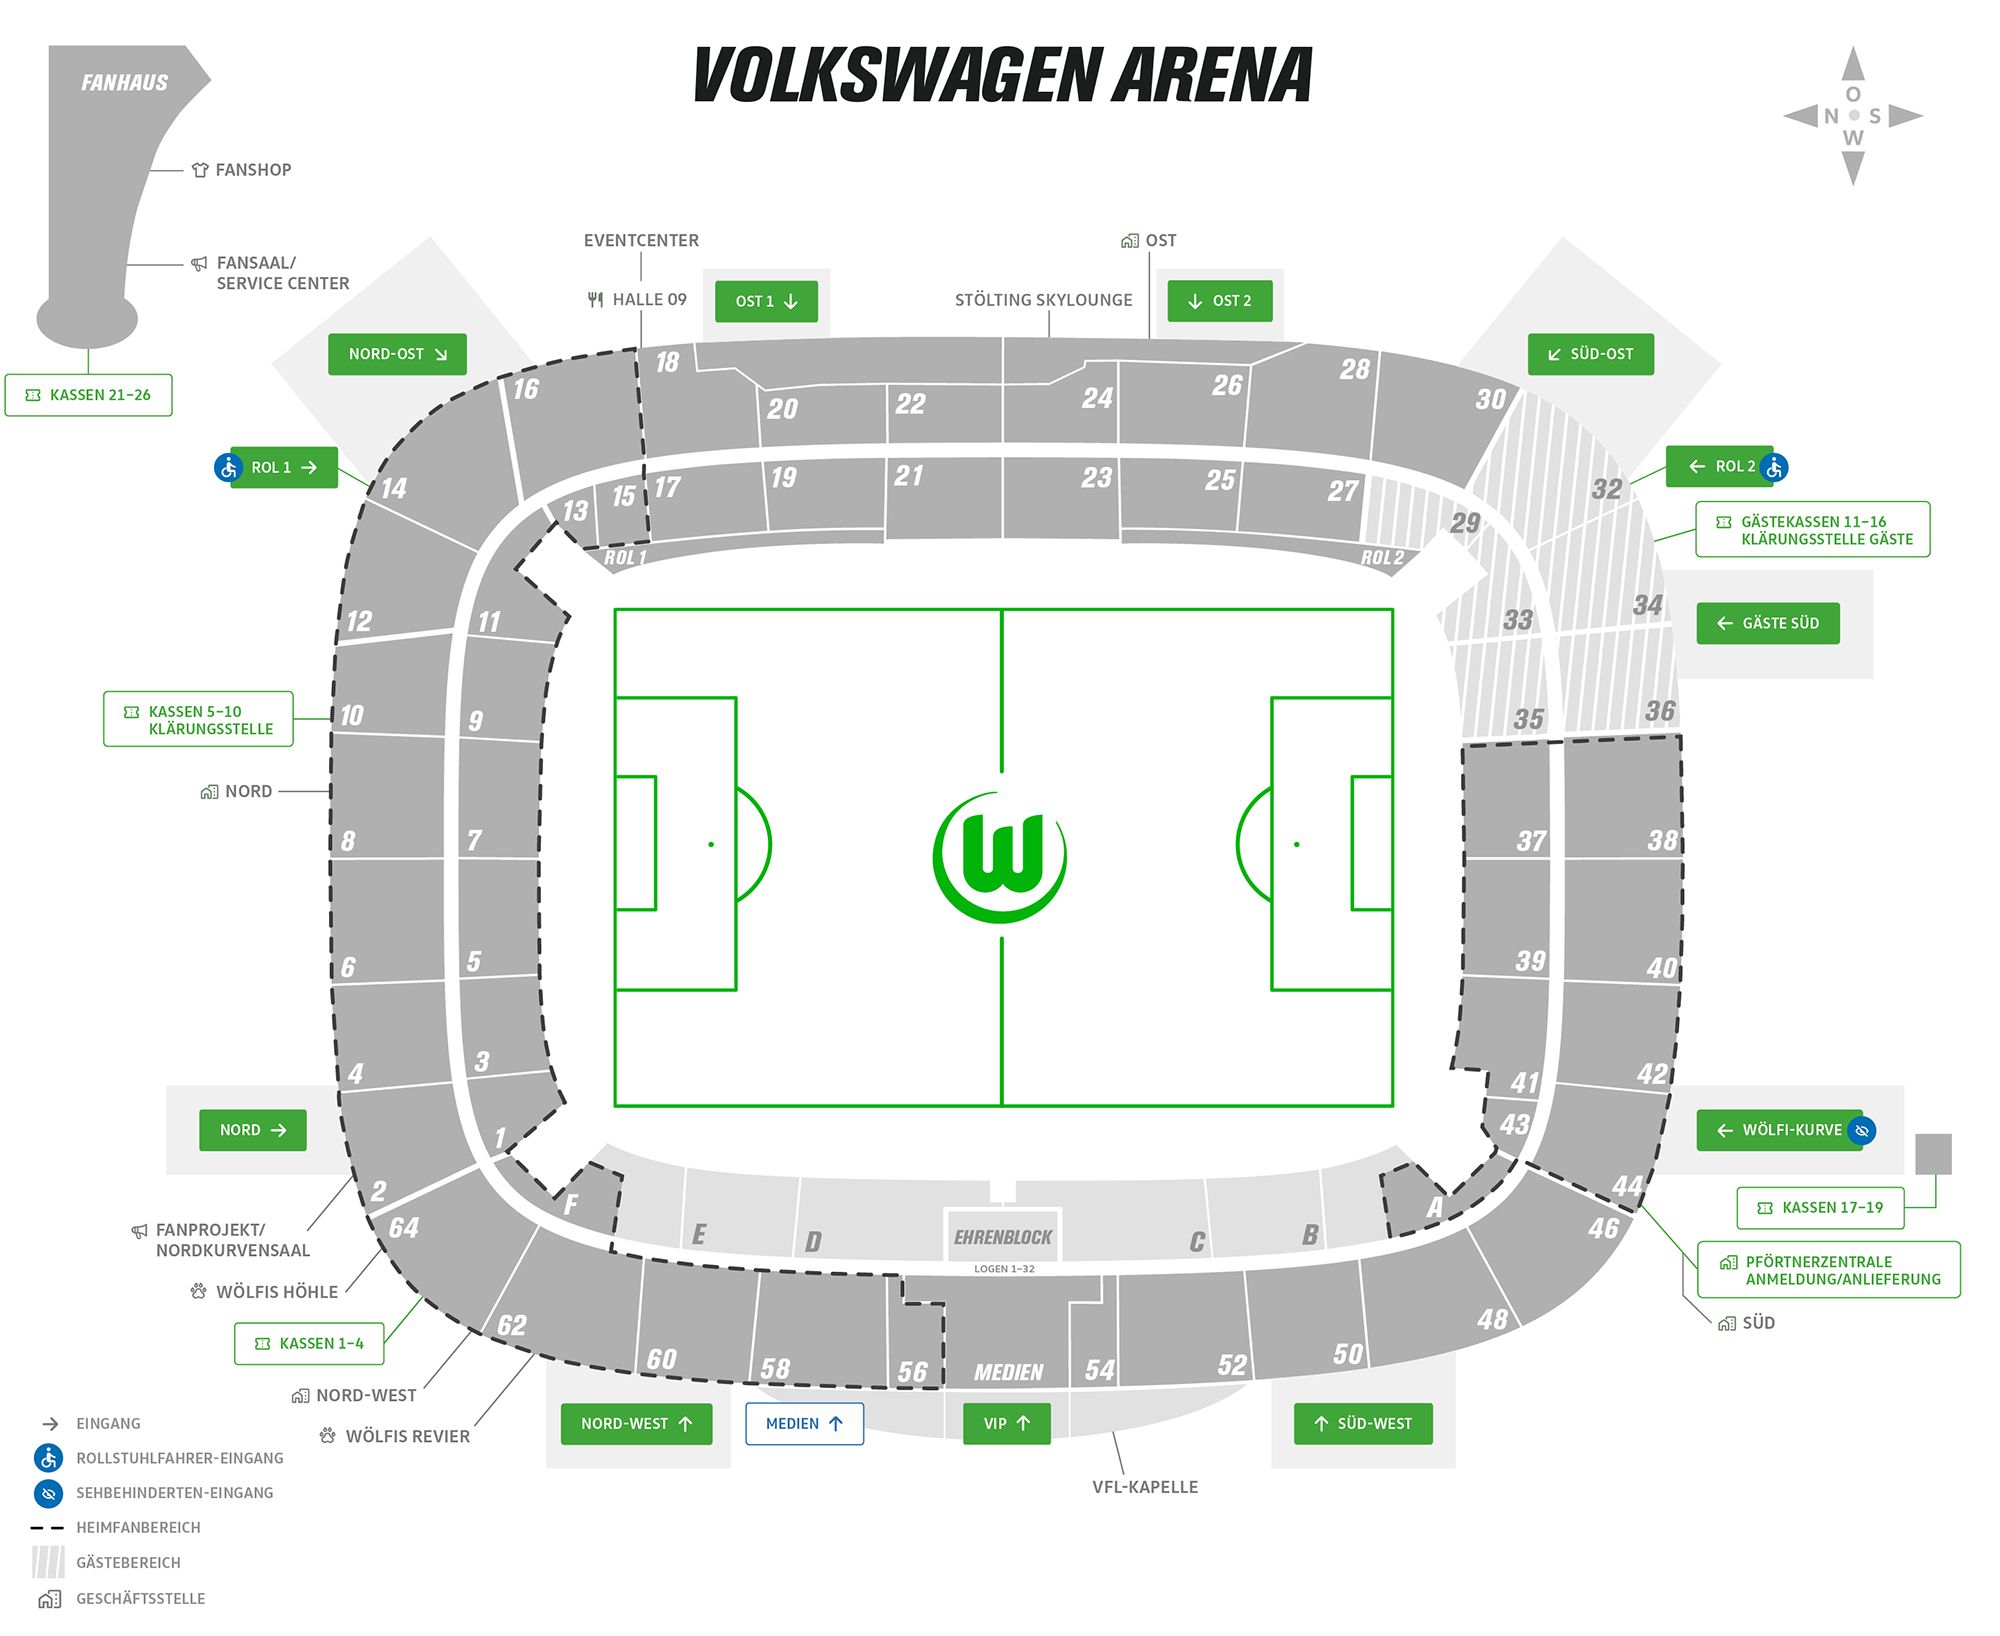 She-Wolves’ new arrivals | VfL Wolfsburg